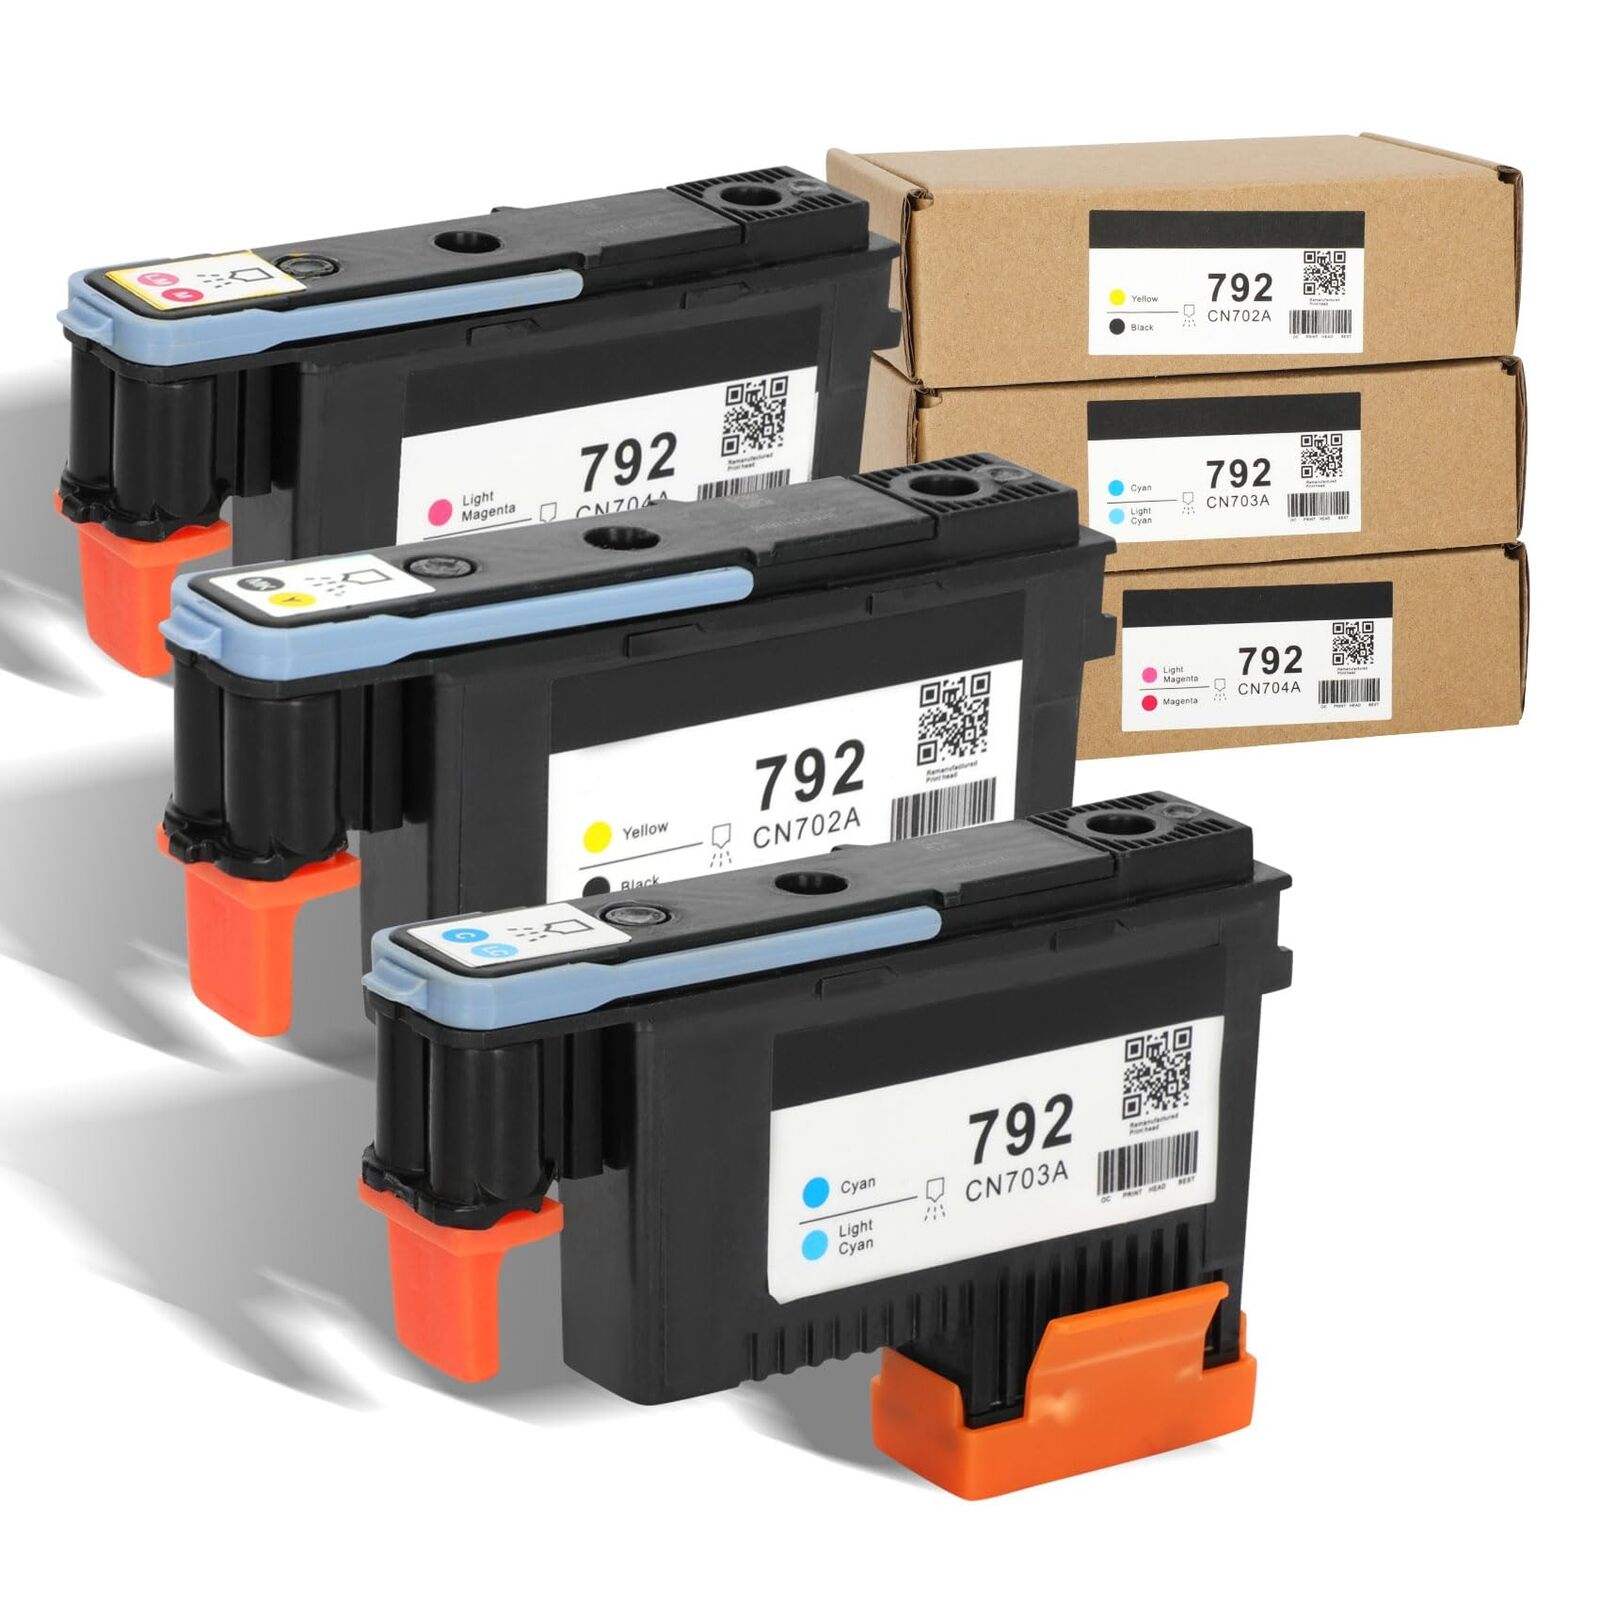 792 Printhead 3-Pack for HP Latex Printers CN702A CN703A CN704A, High-Quality